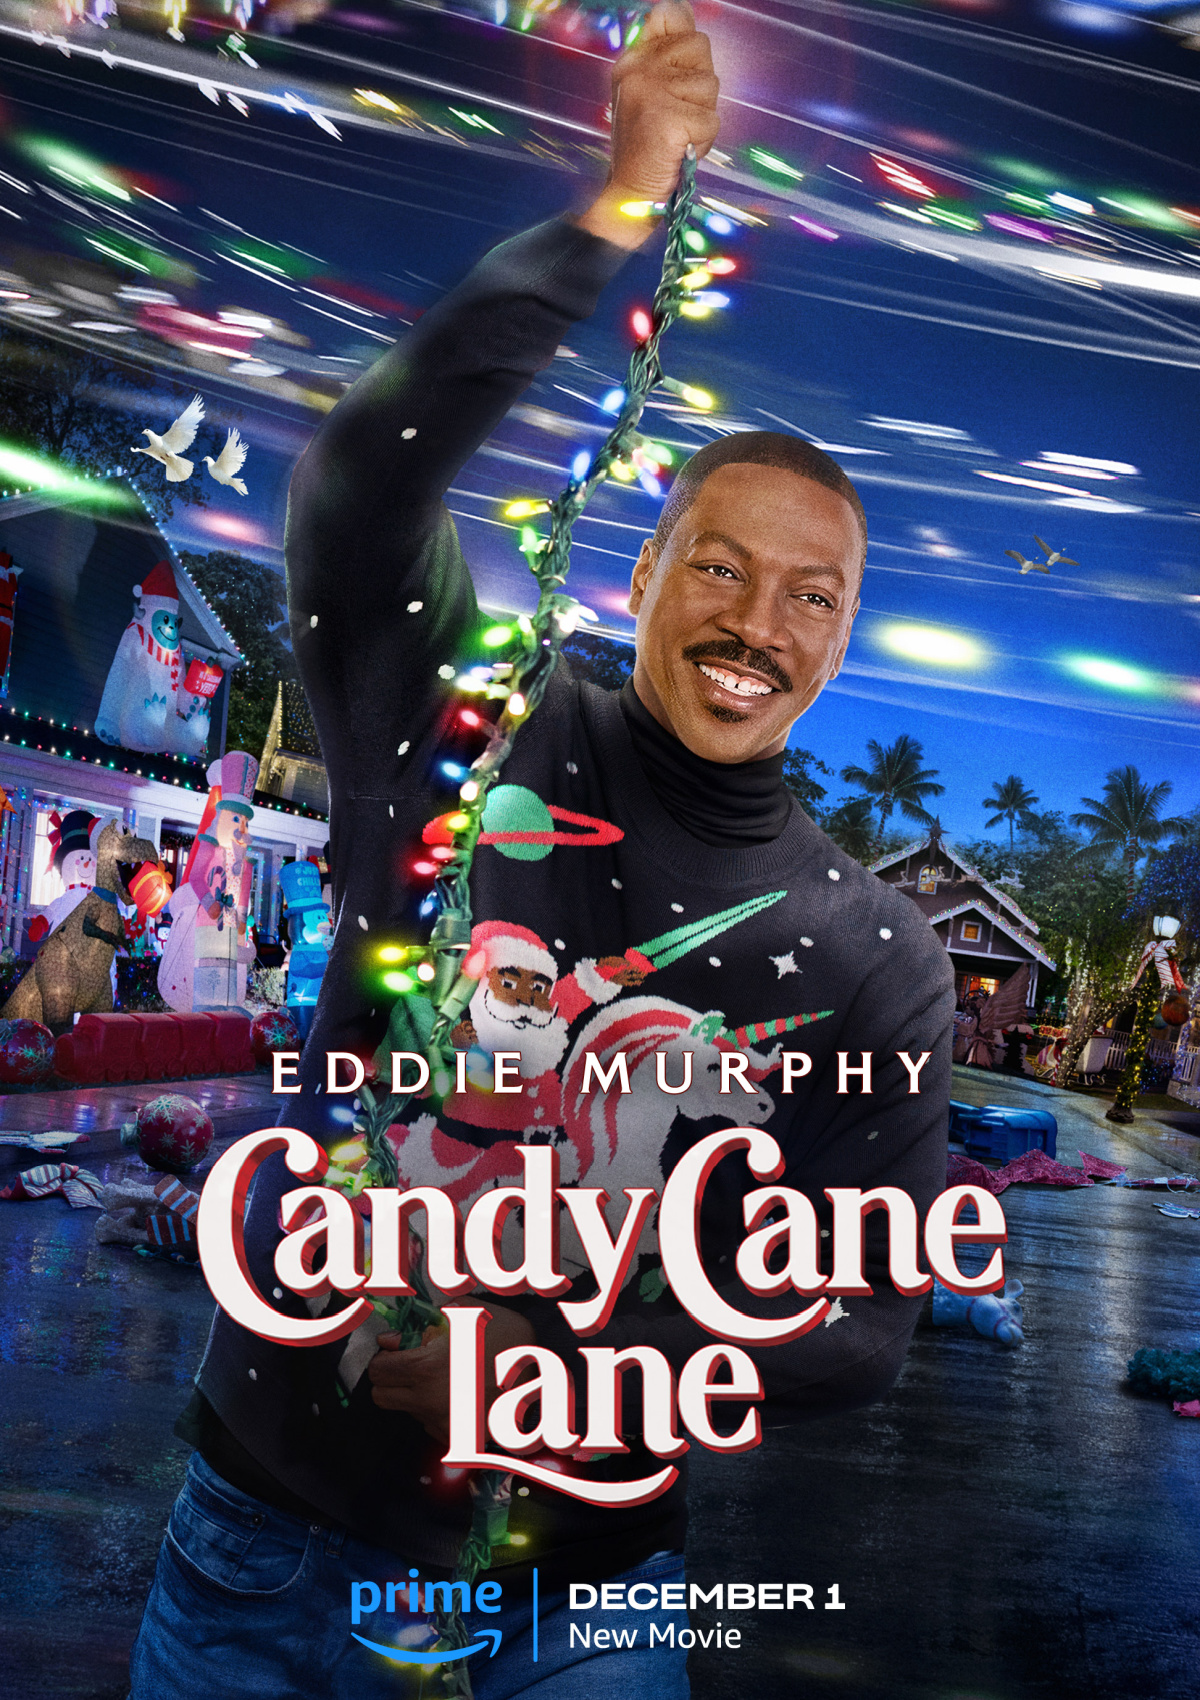 'Candy Cane Lane' starring Eddie Murphy premieres on Prime Video on December 1st.